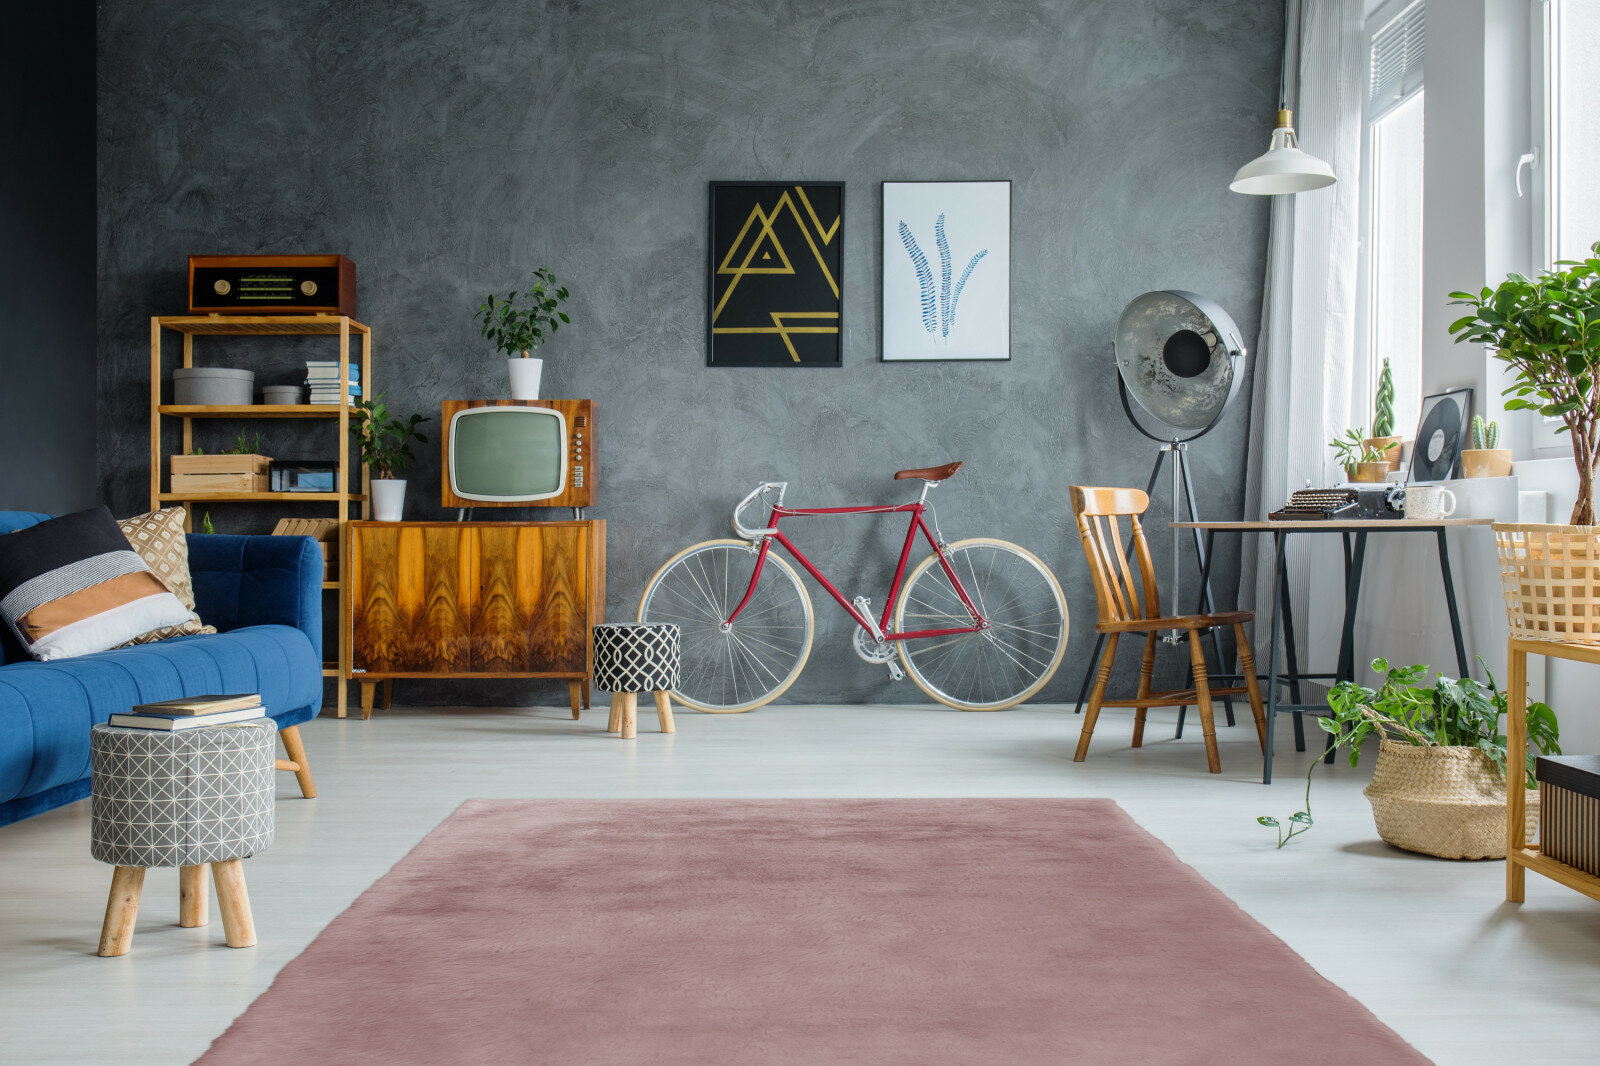 Kunstfell-Teppich - Kaninchenfell-Haptik - rosa - 160x230 cm | Online bei  ROLLER kaufen